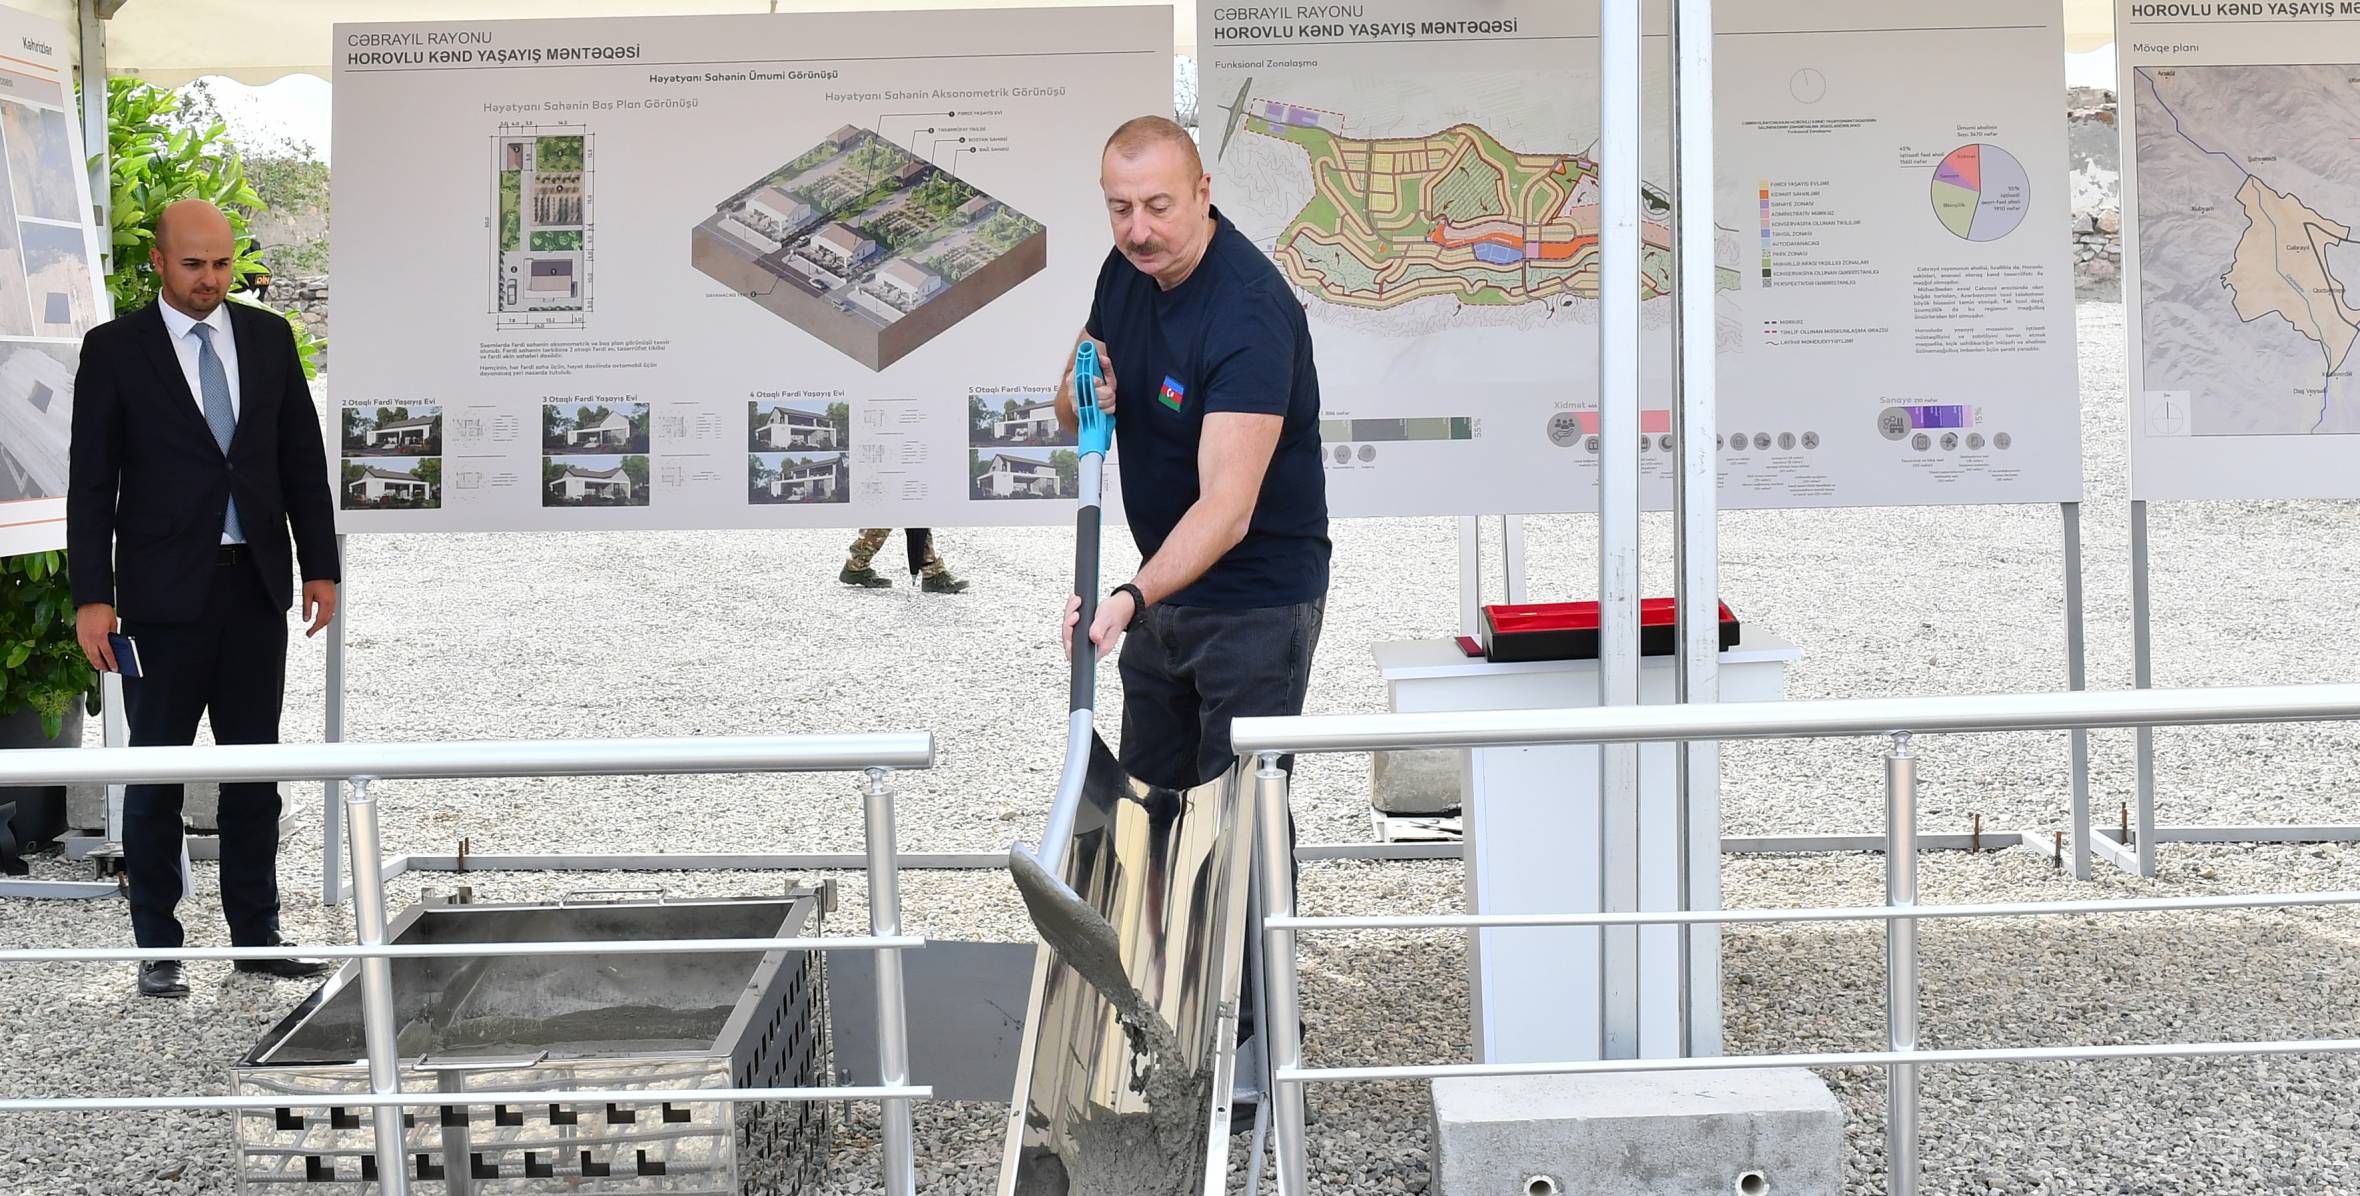 Ильхам Алиев заложил фундамент села Хоровлу